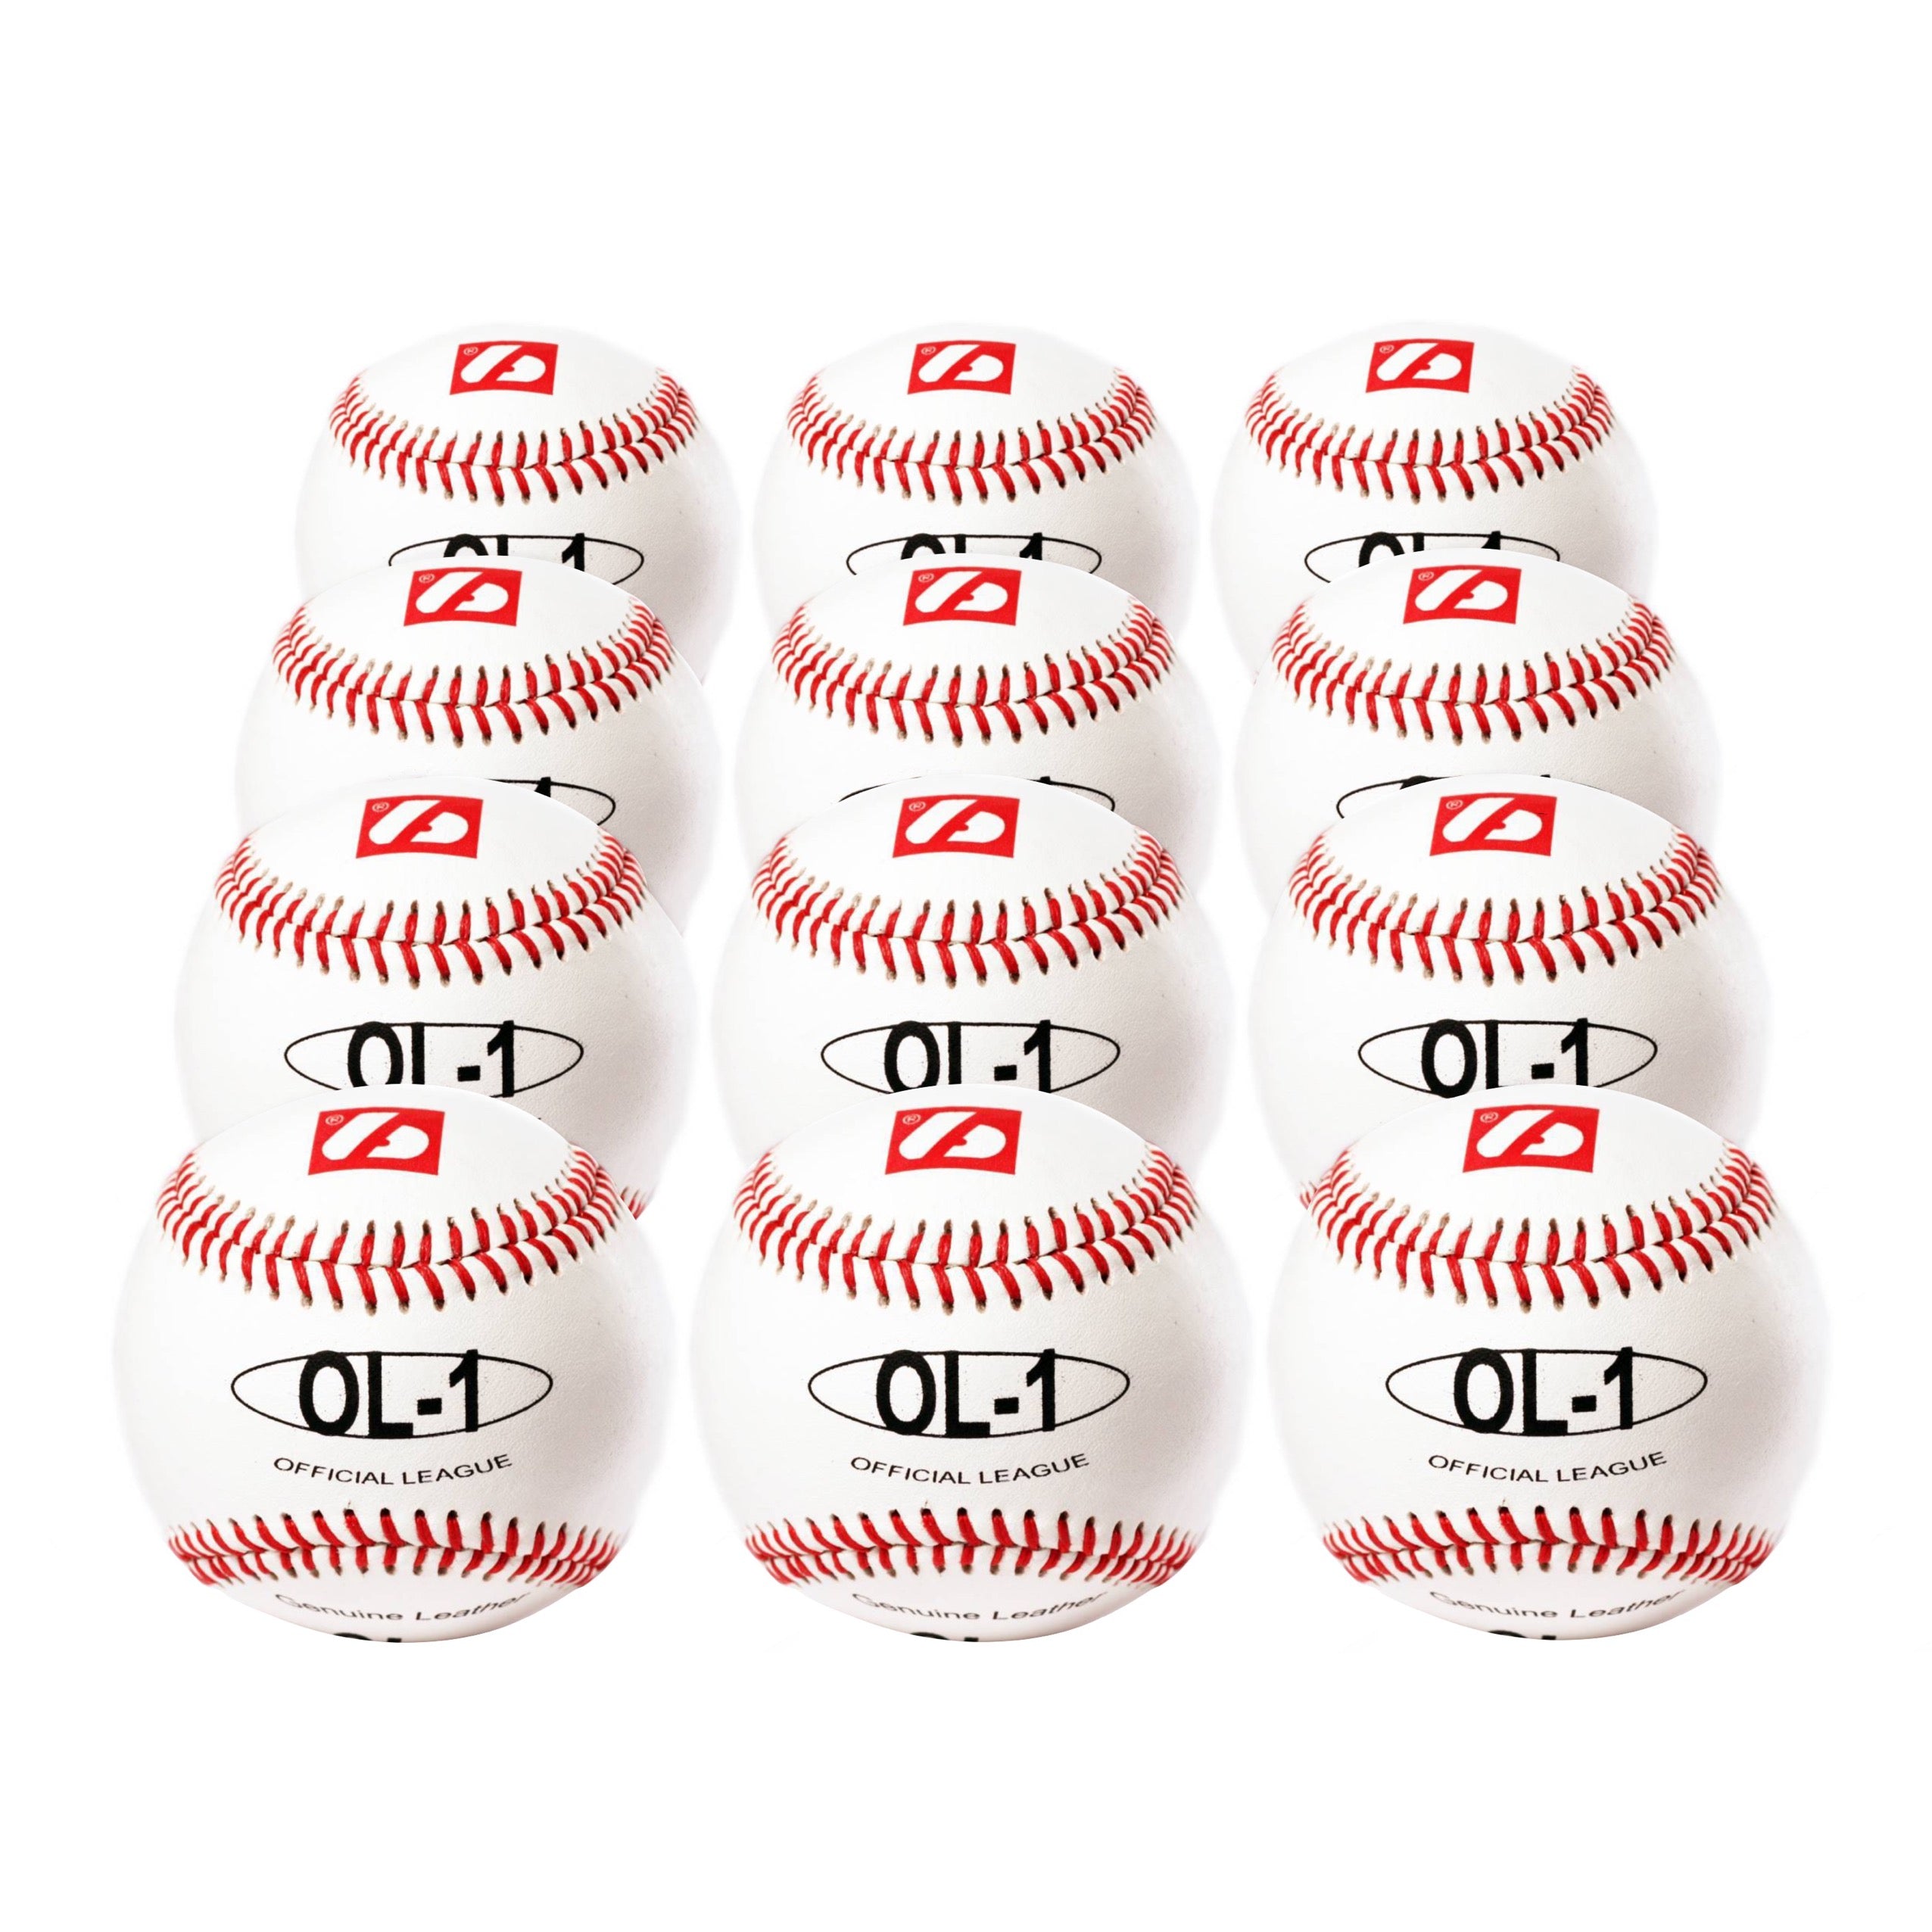 Balles de baseball MLB, paq. 4